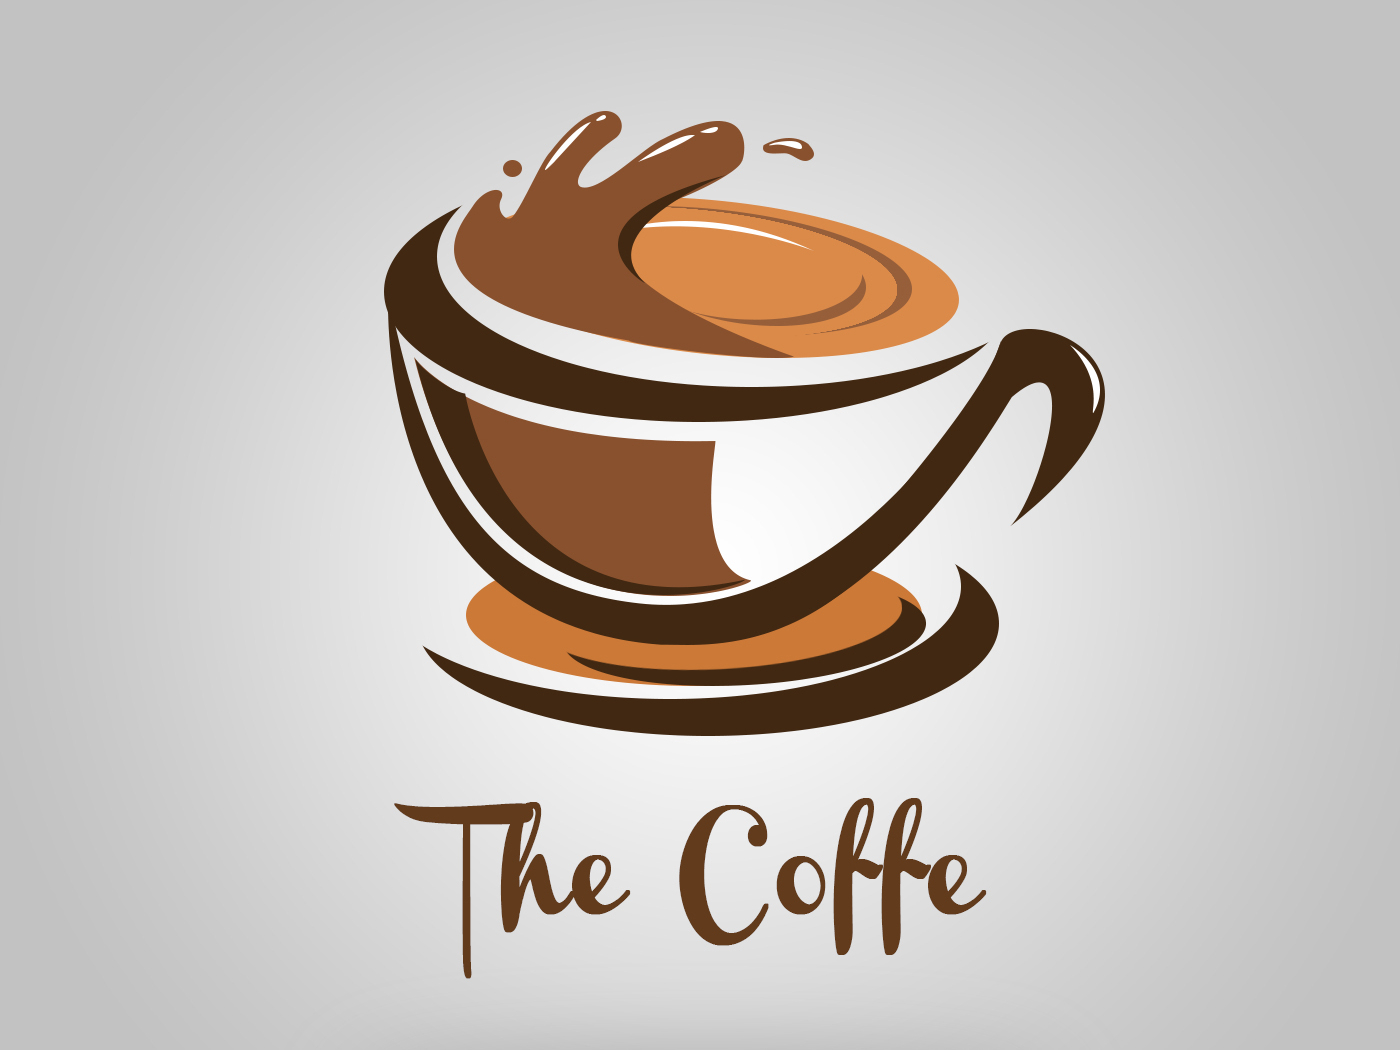 Coffee Logo by Mohammad Taufan Pramono on Dribbble